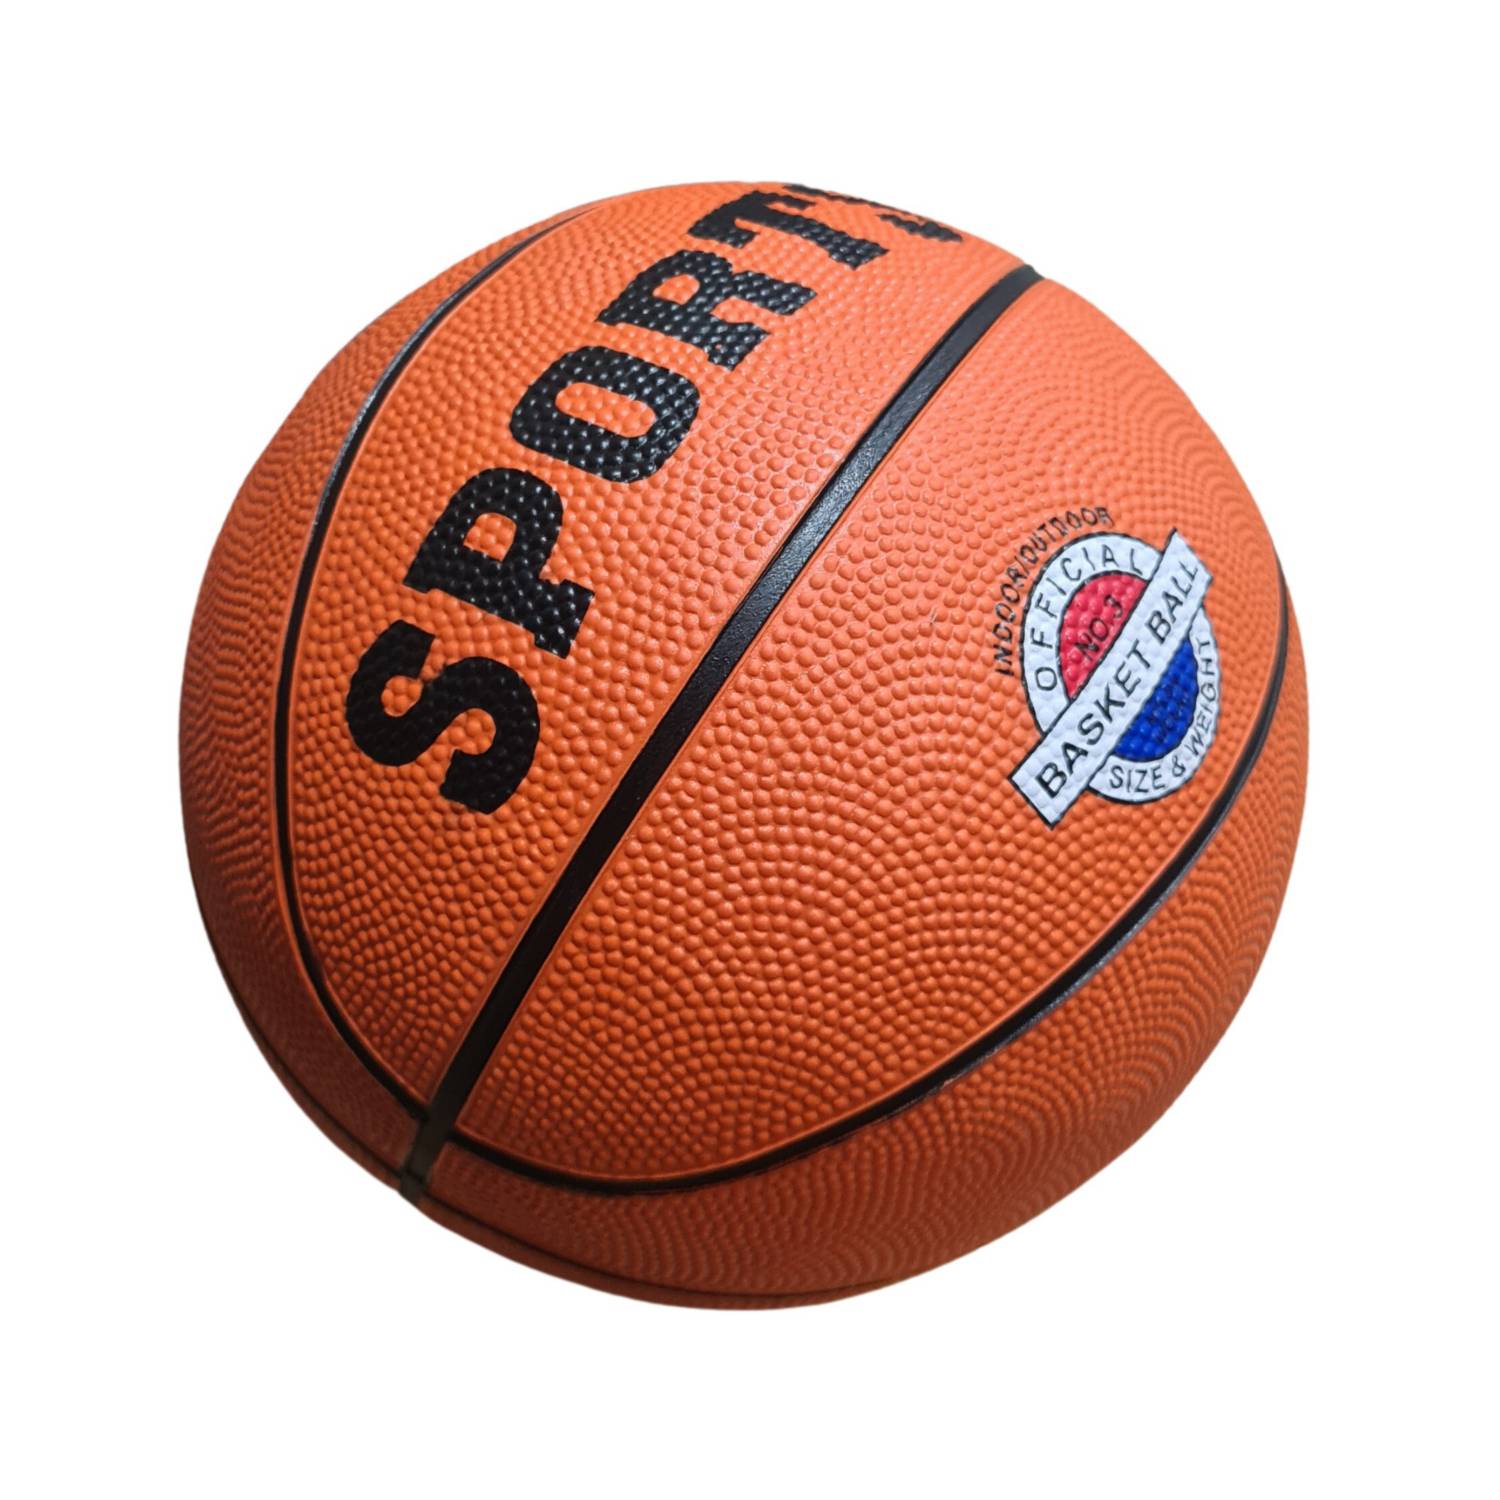 Balon de Baloncesto o Basquetbol Fire Sports de Piel B2000 – Fire Sports